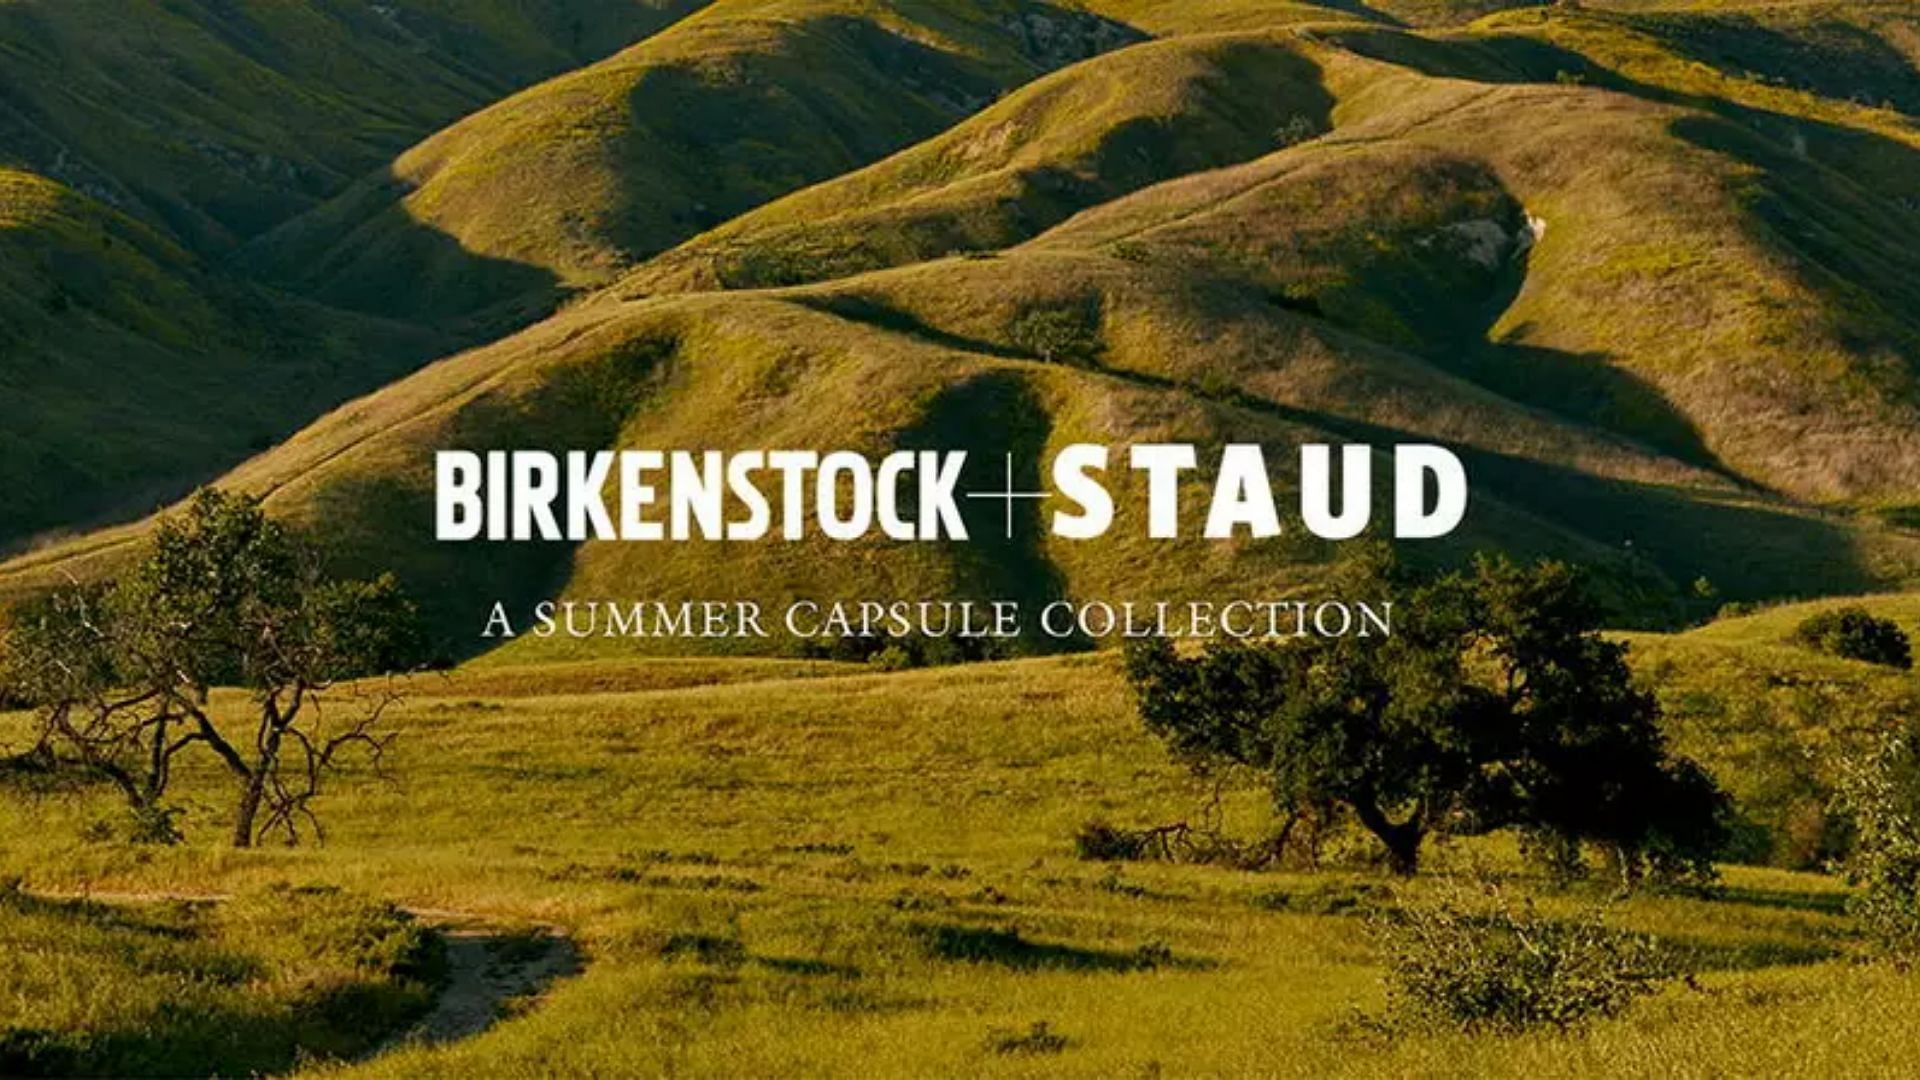 Birkenstock x Staud collection (Image via Staud)